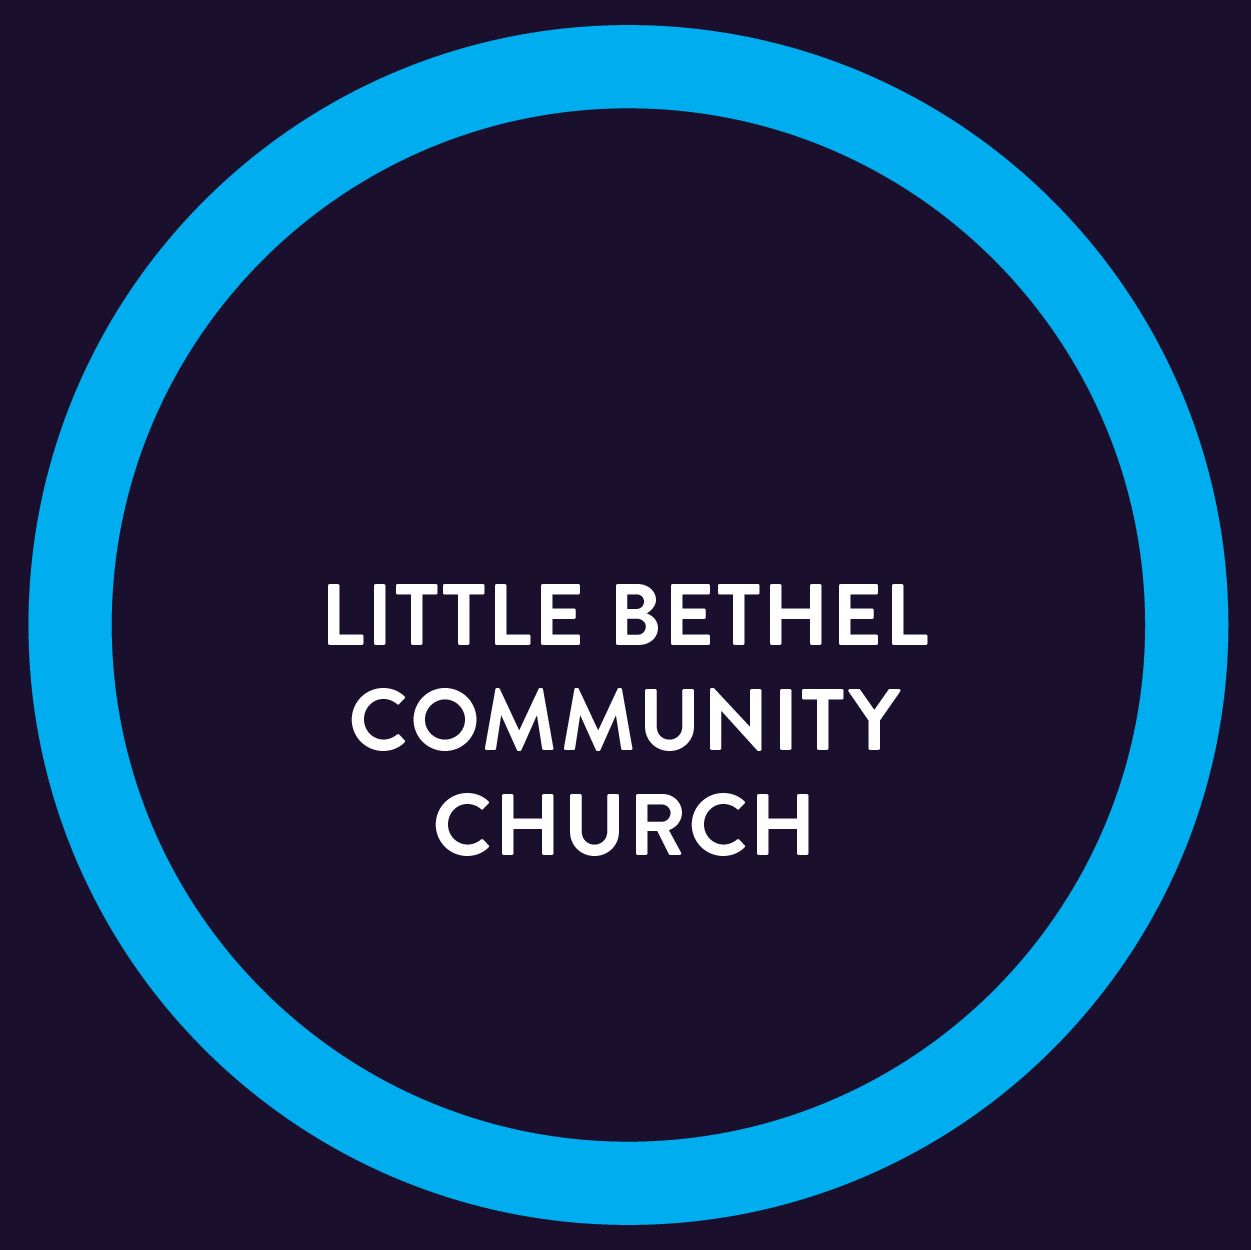 TC Circle_little bethel community church.png